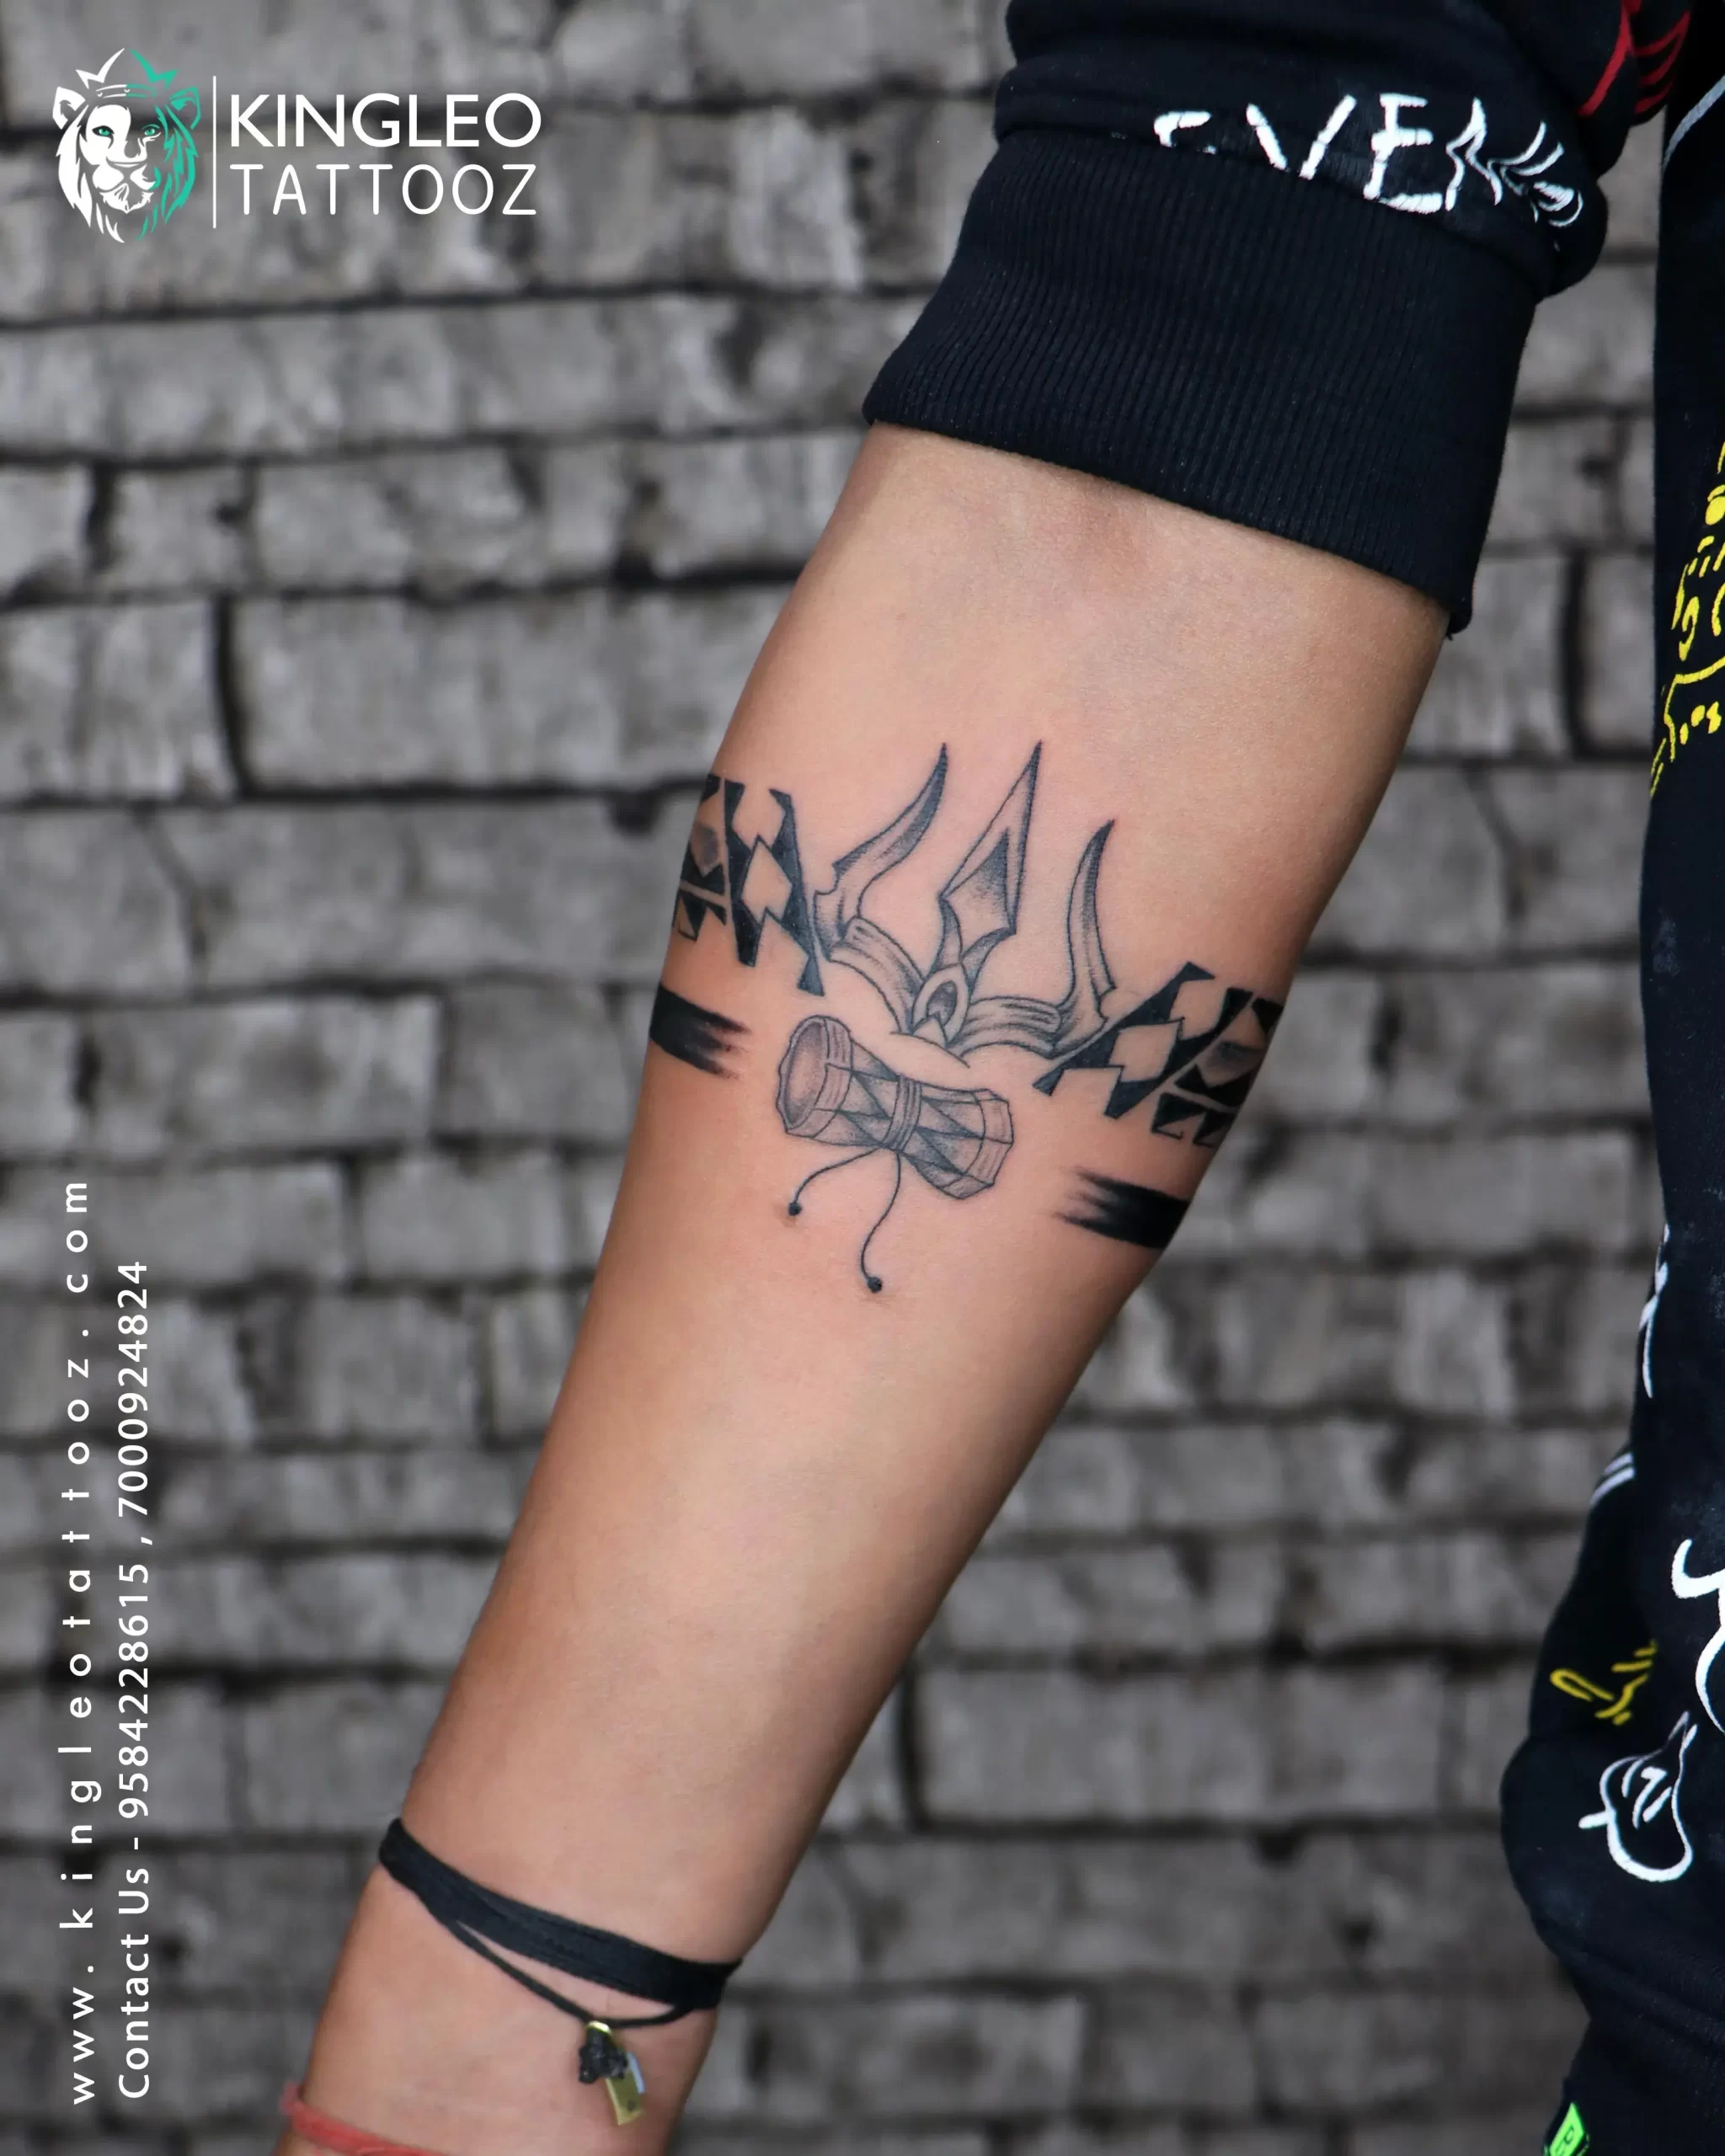 86 Wrist Tattoo Ideas That Make A Statement | Bored Panda